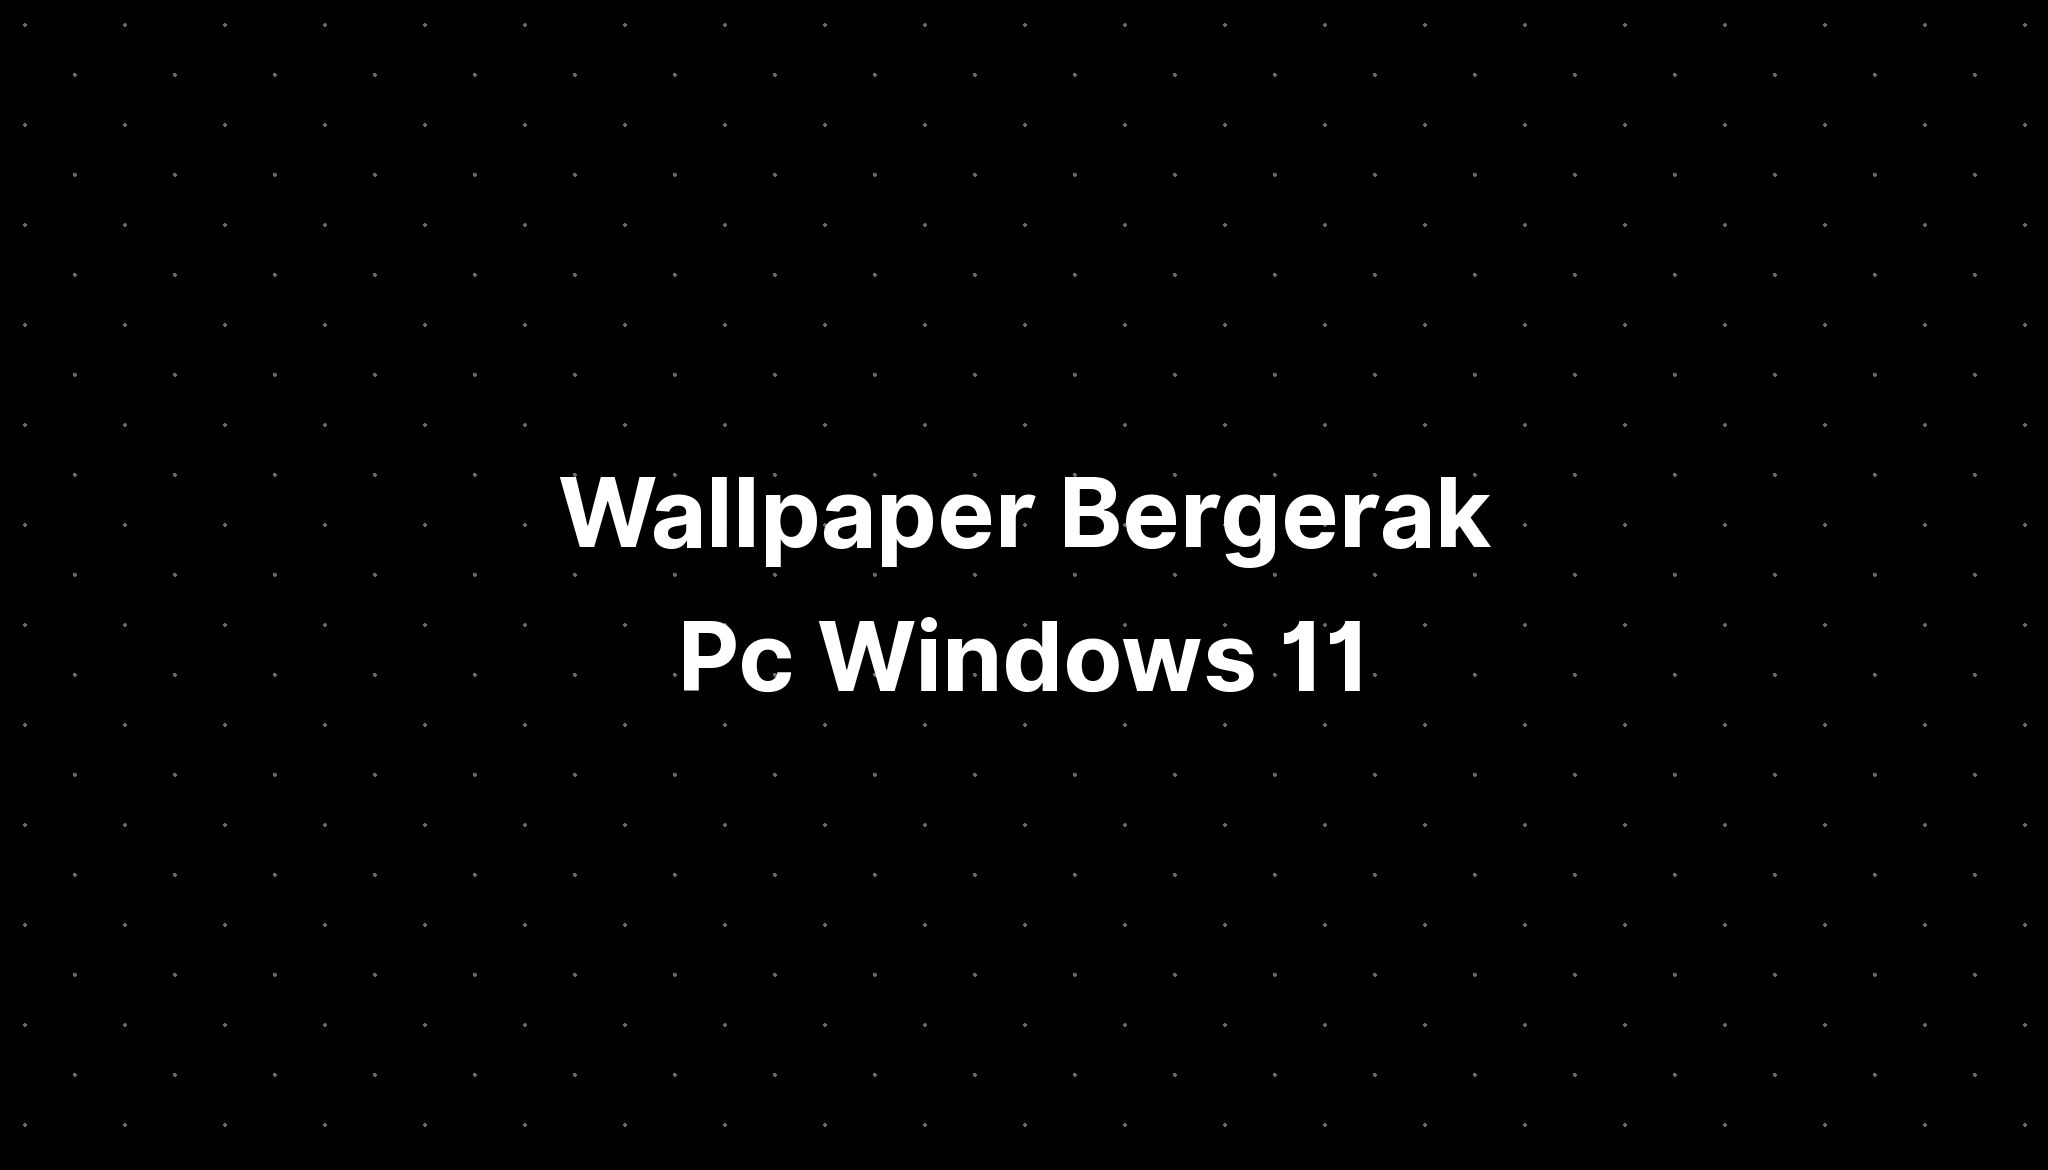 Wallpaper Bergerak Pc Windows 11 - IMAGESEE